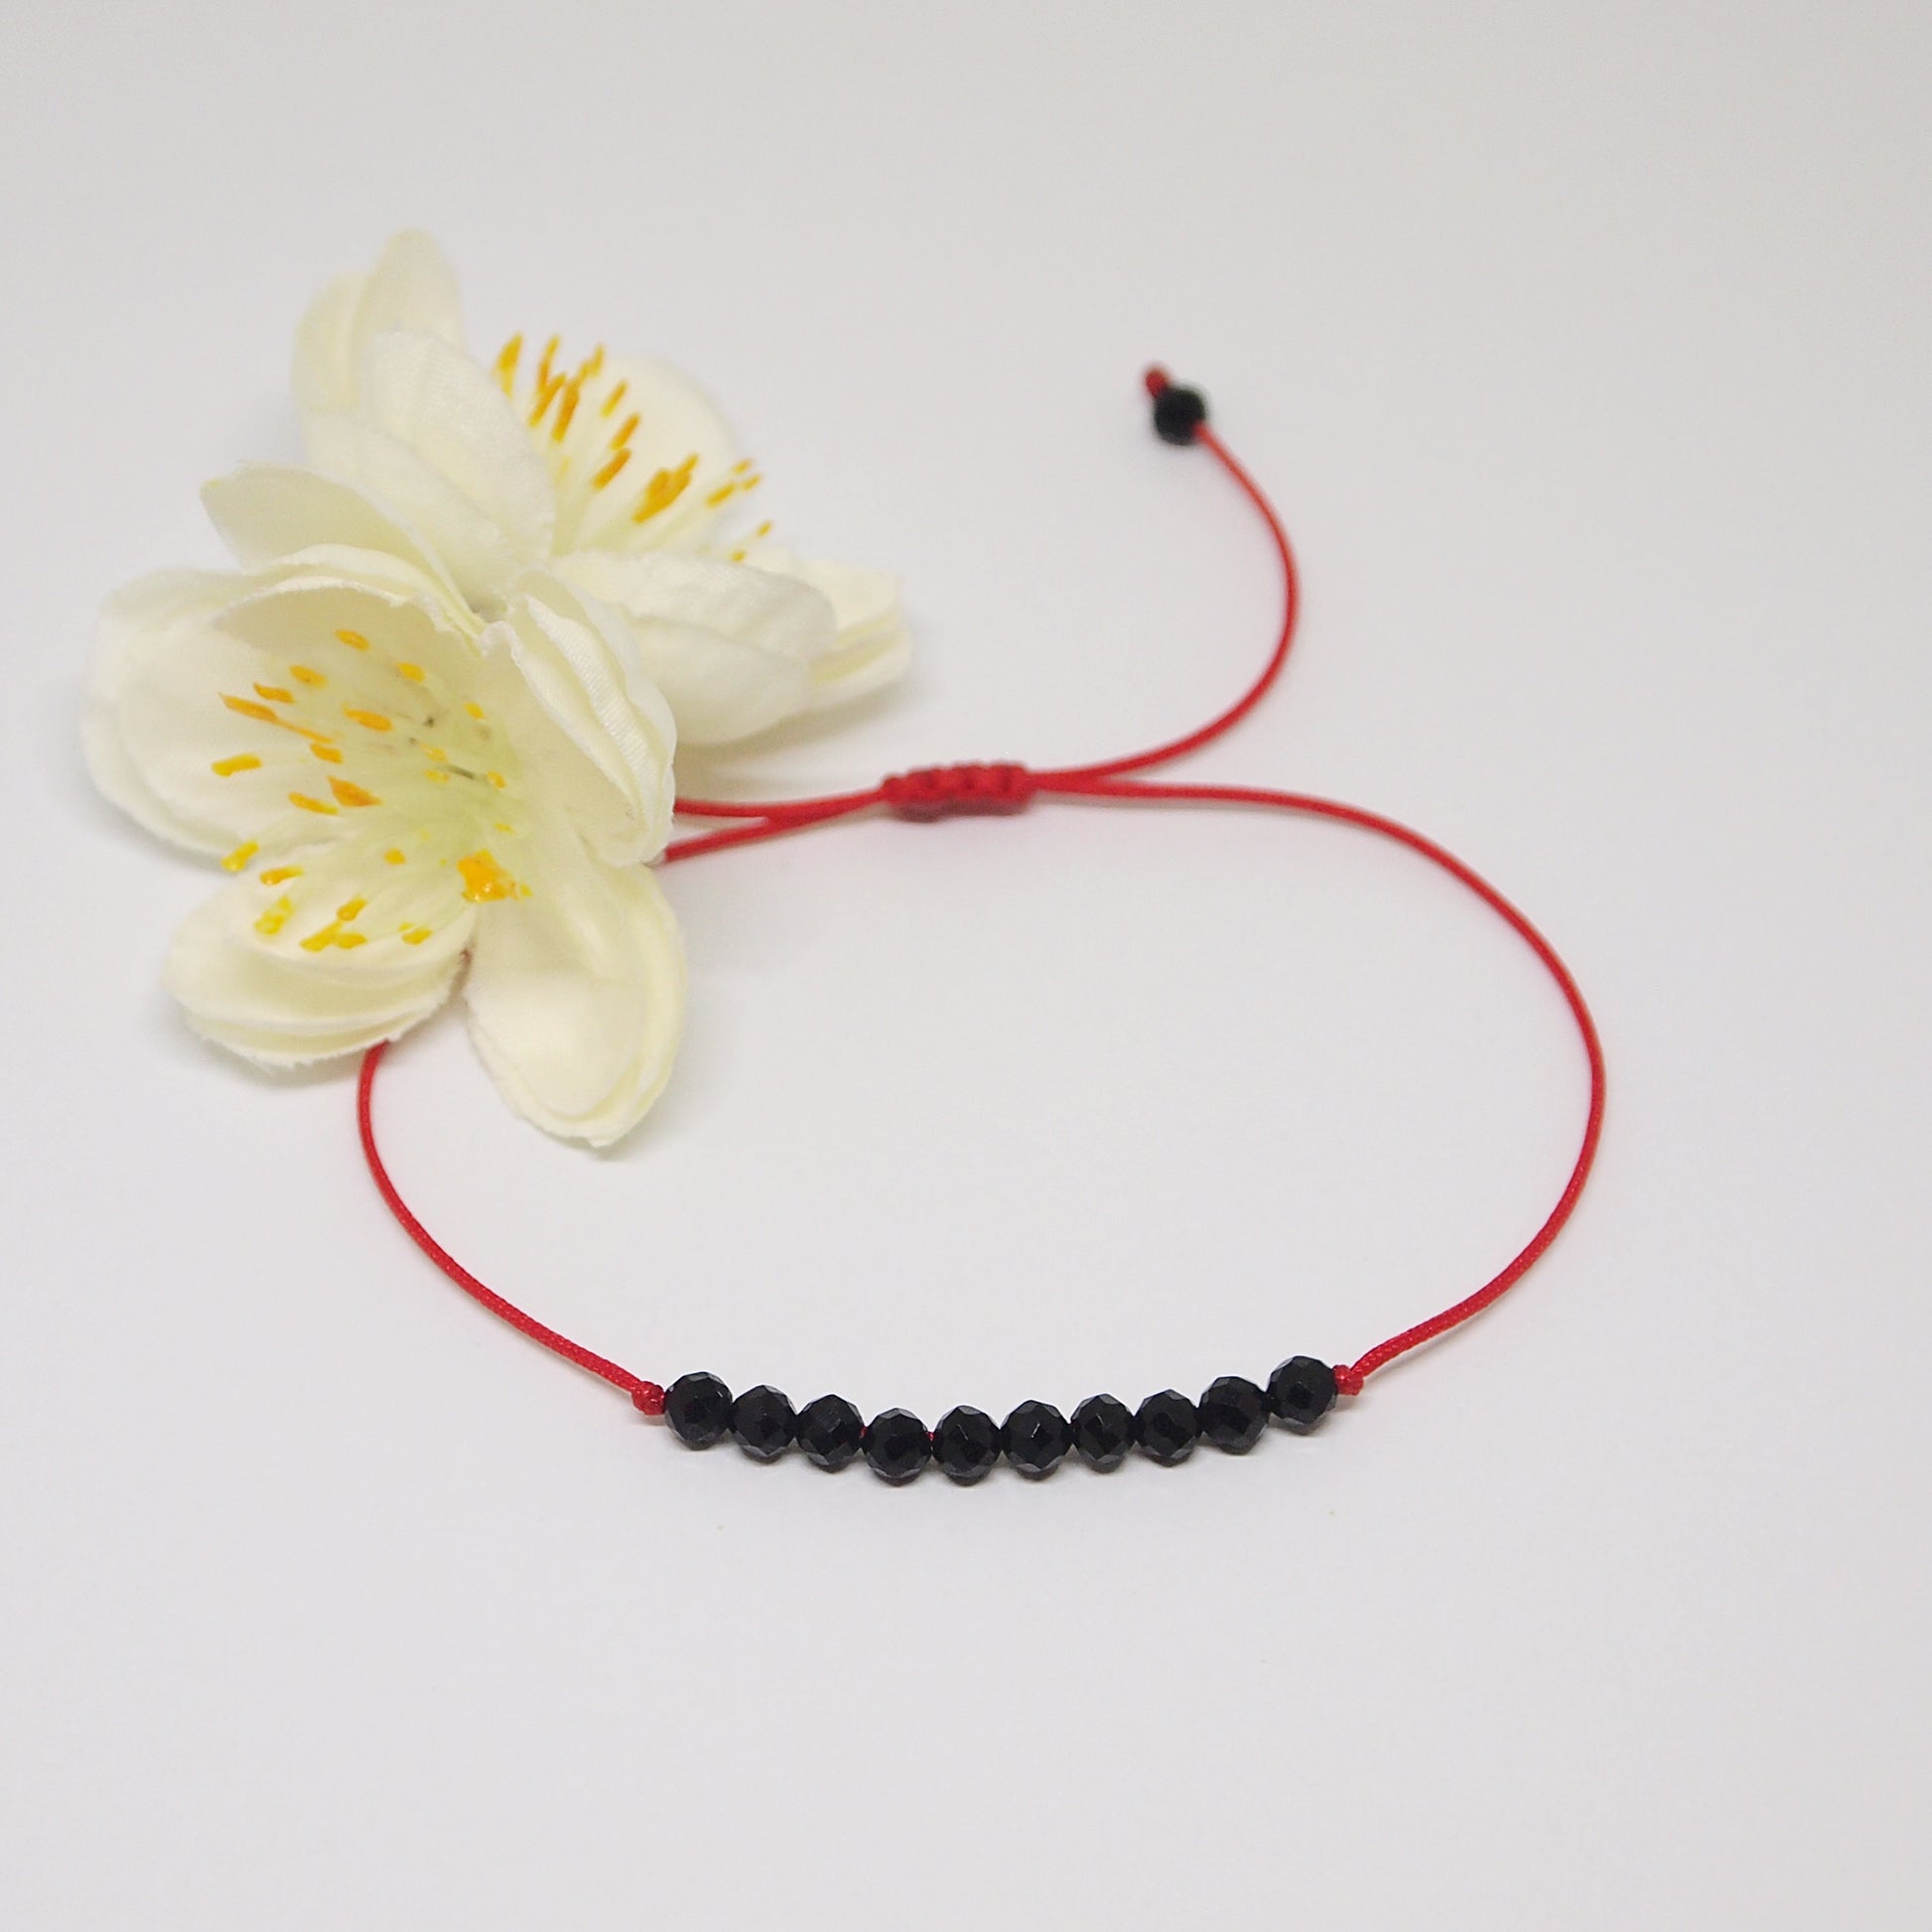 Black tourmaline protection bracelet on red string